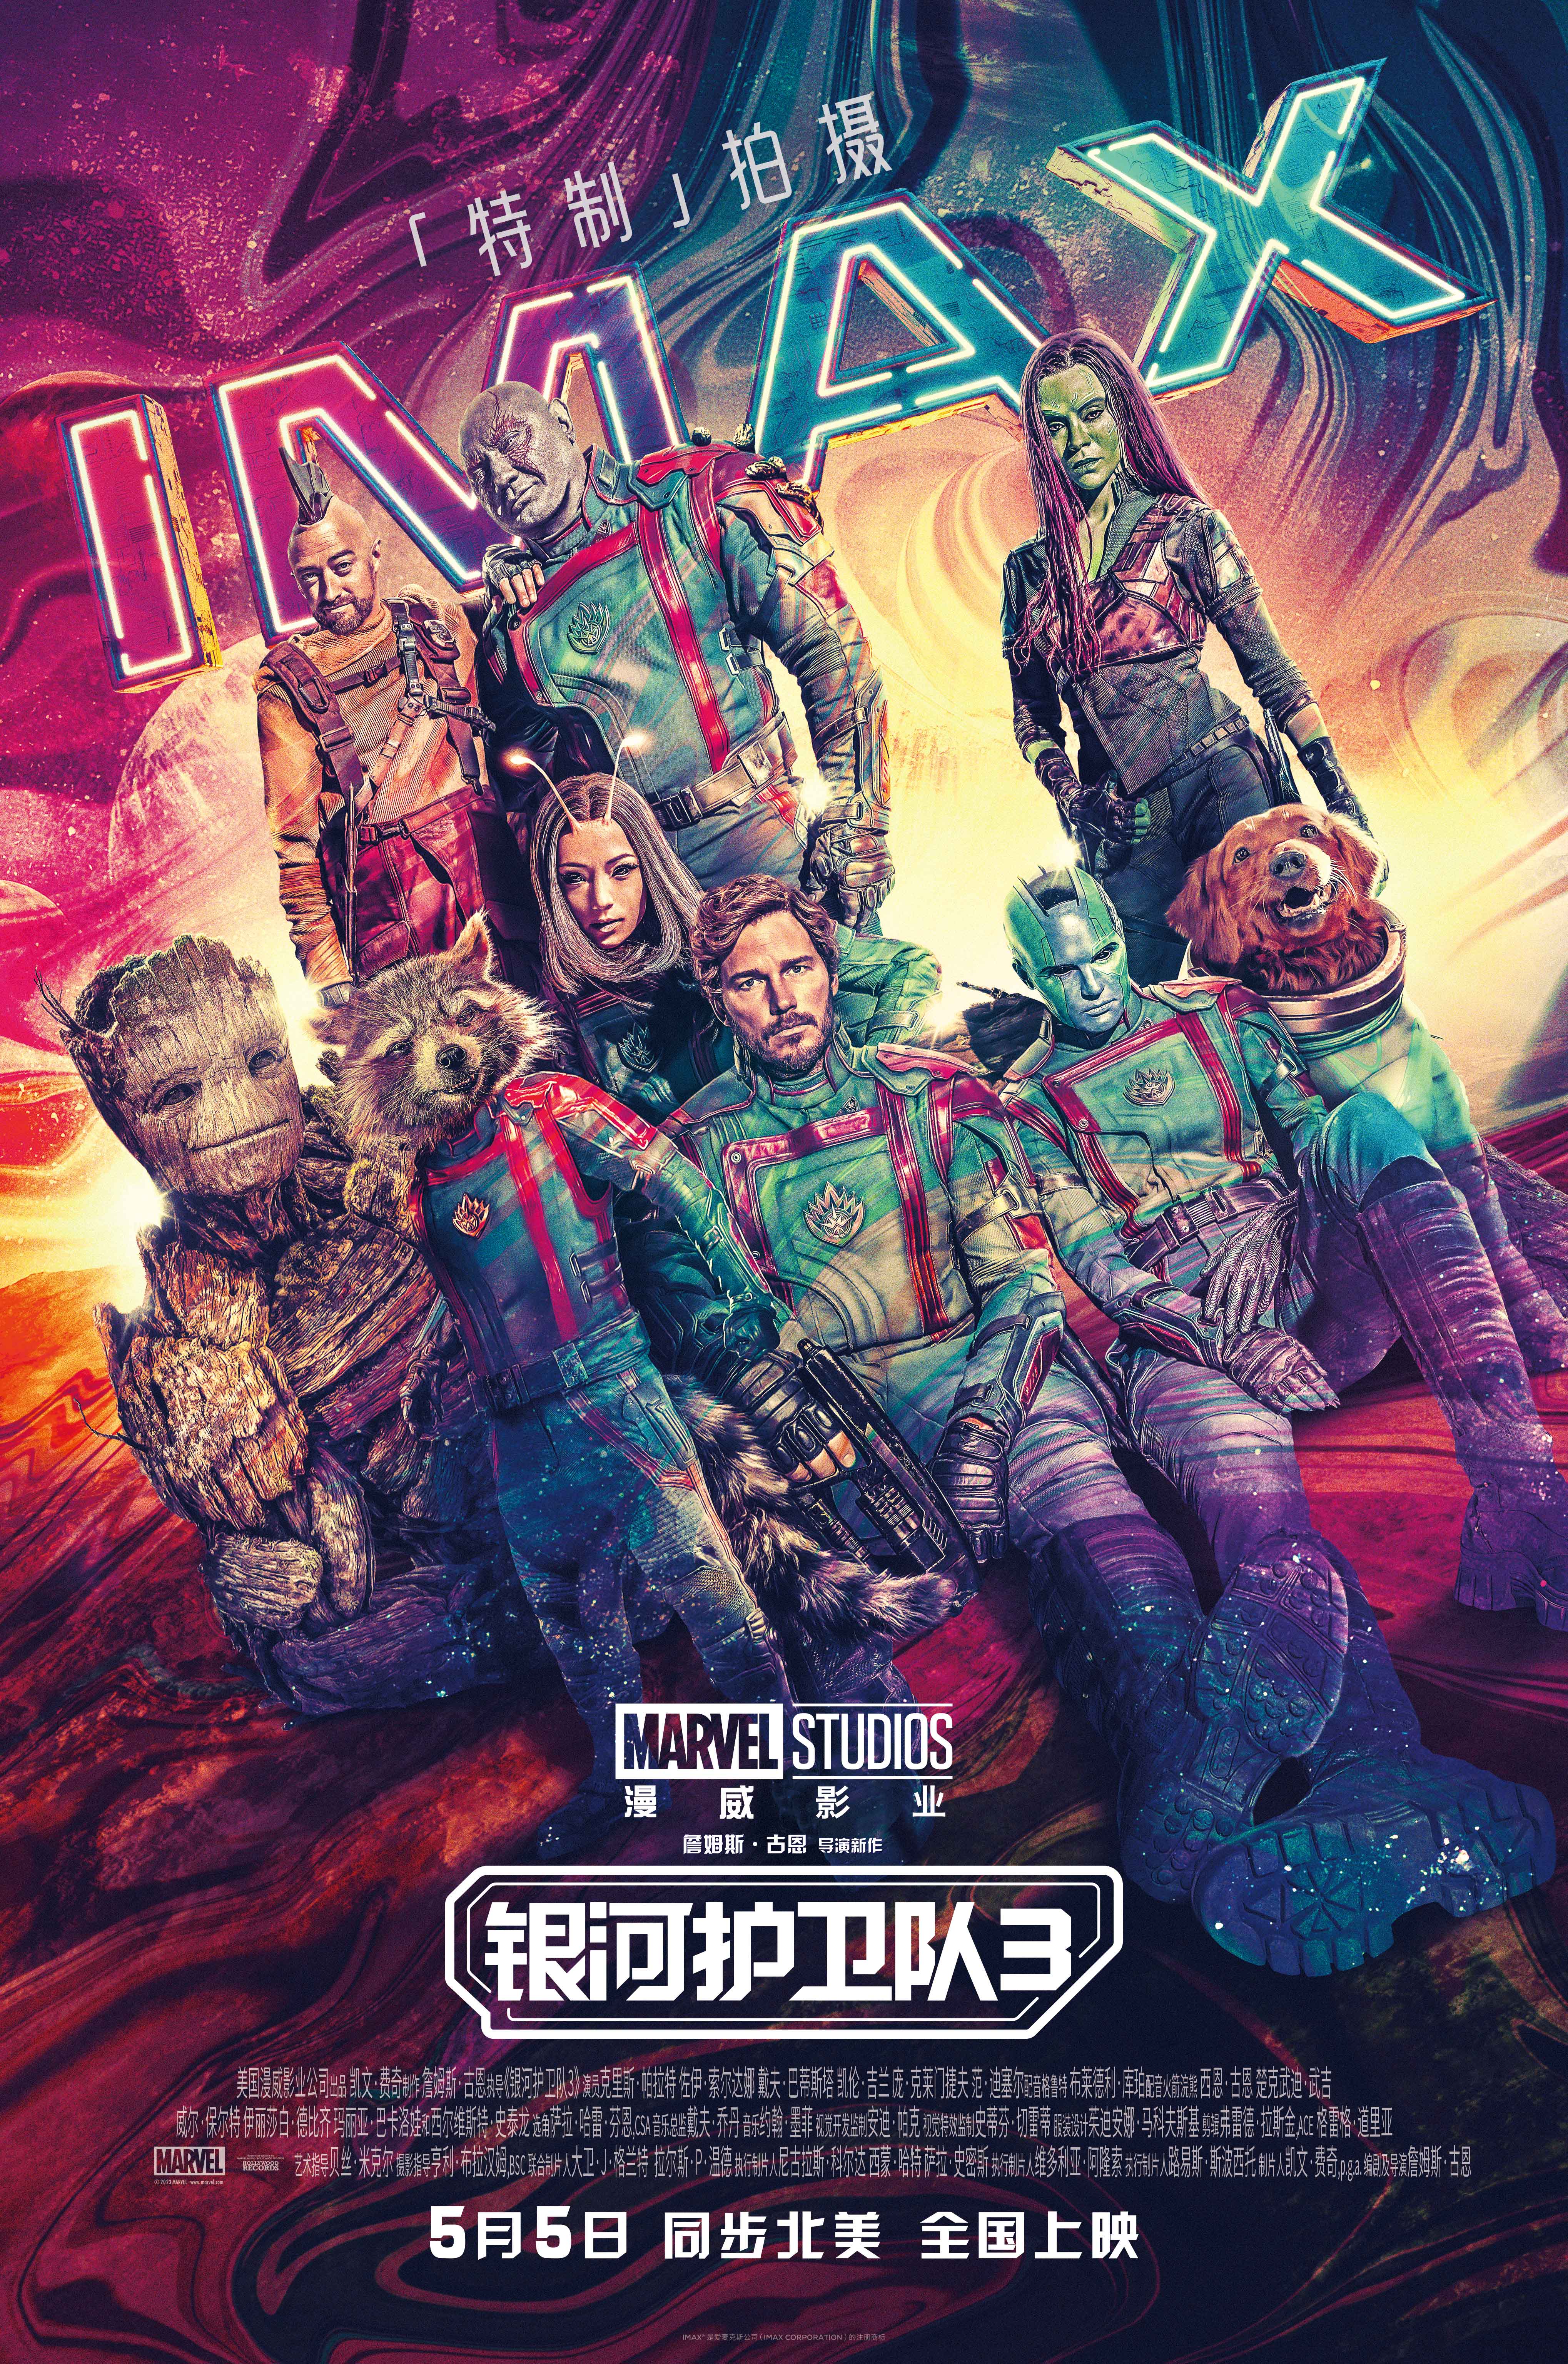 IMAX《银河护卫队3》专属海报.jpg